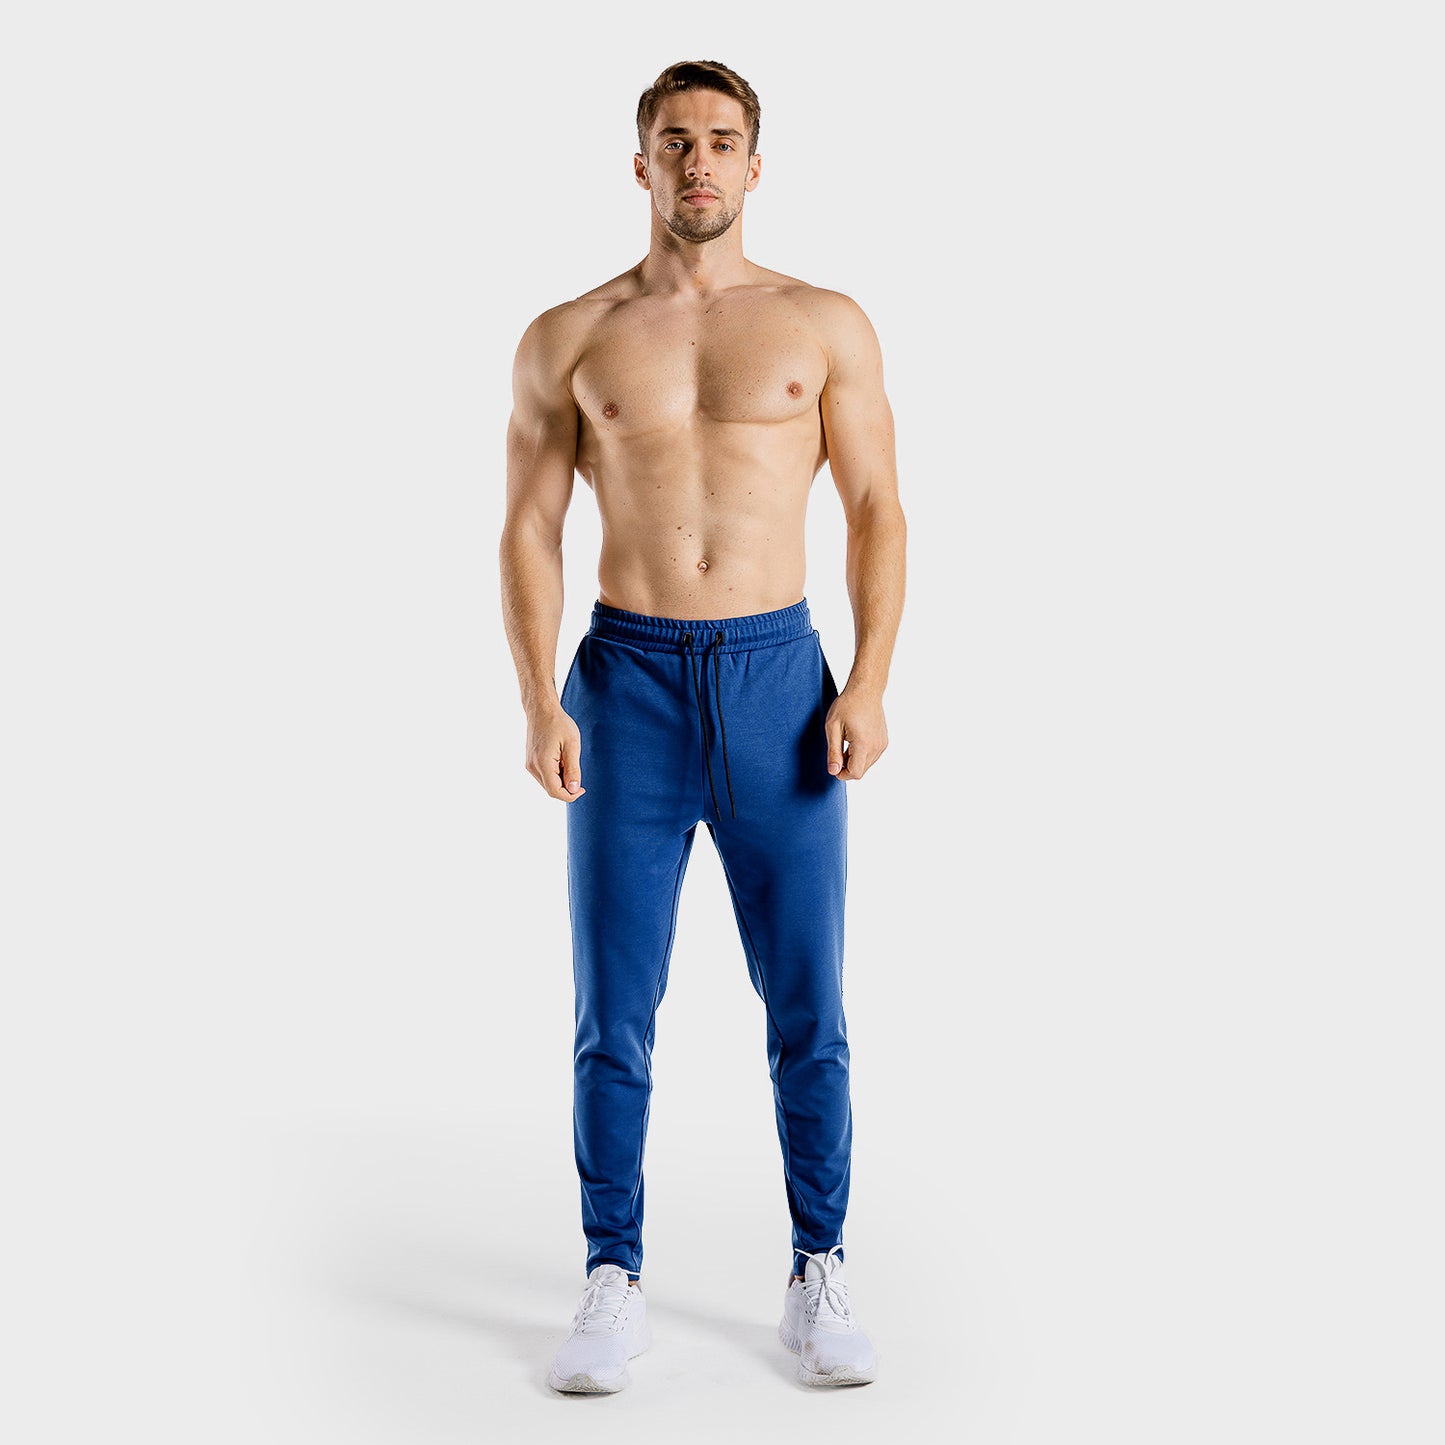 squatwolf-workout-pants-for-men-flux-joggers-navy-gym-wear